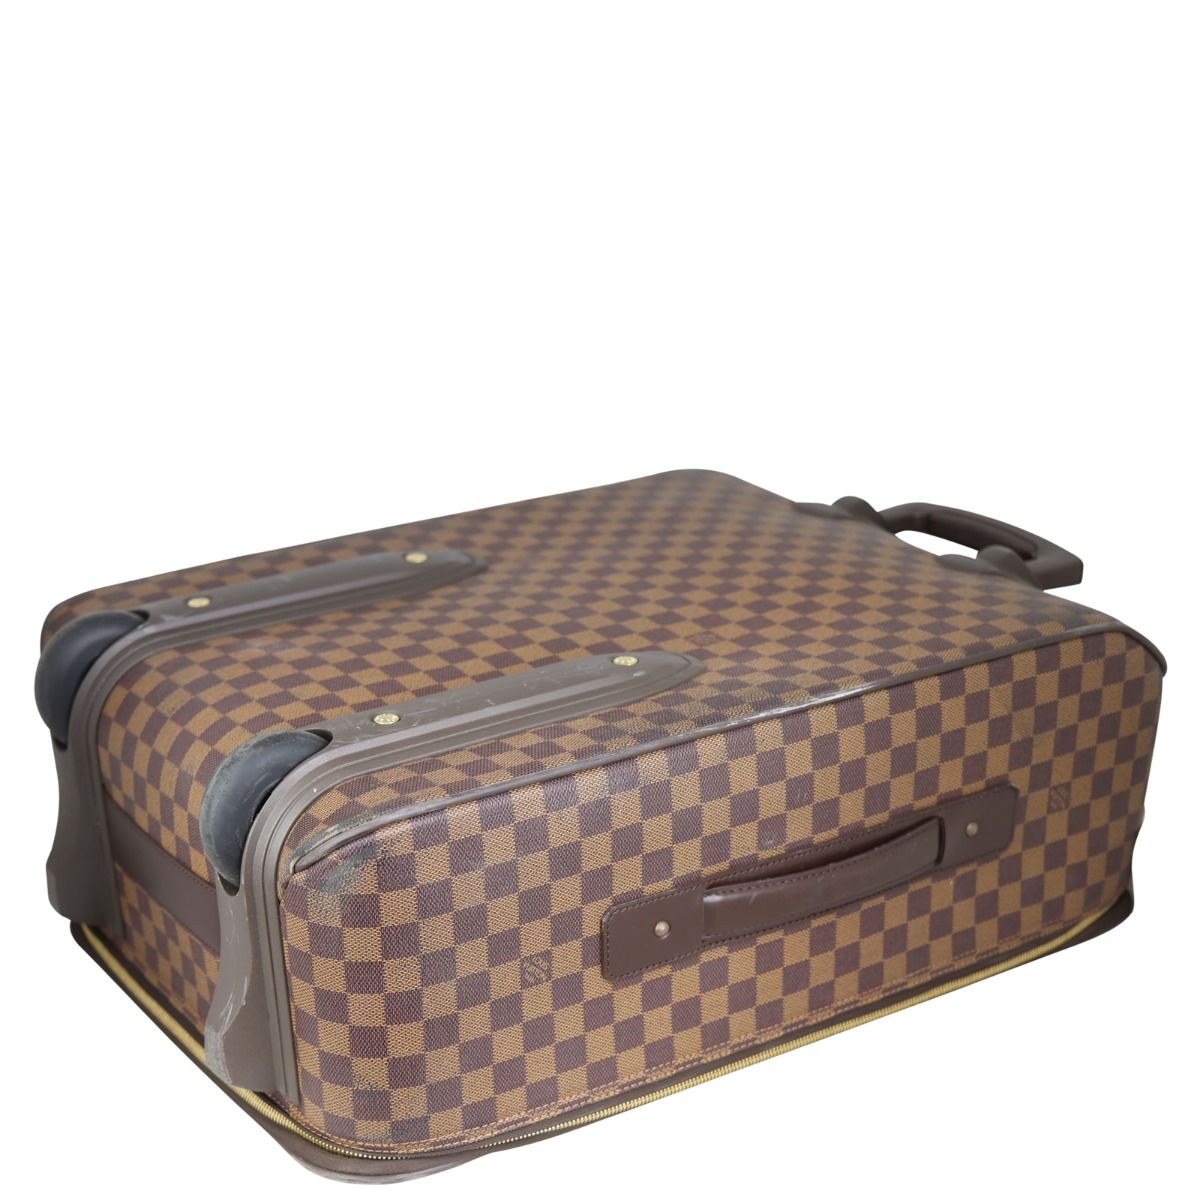 Louis Vuitton Damier Ebene Pegase 55 Rolling Luggage Carry-On Suitcase Bag  861898